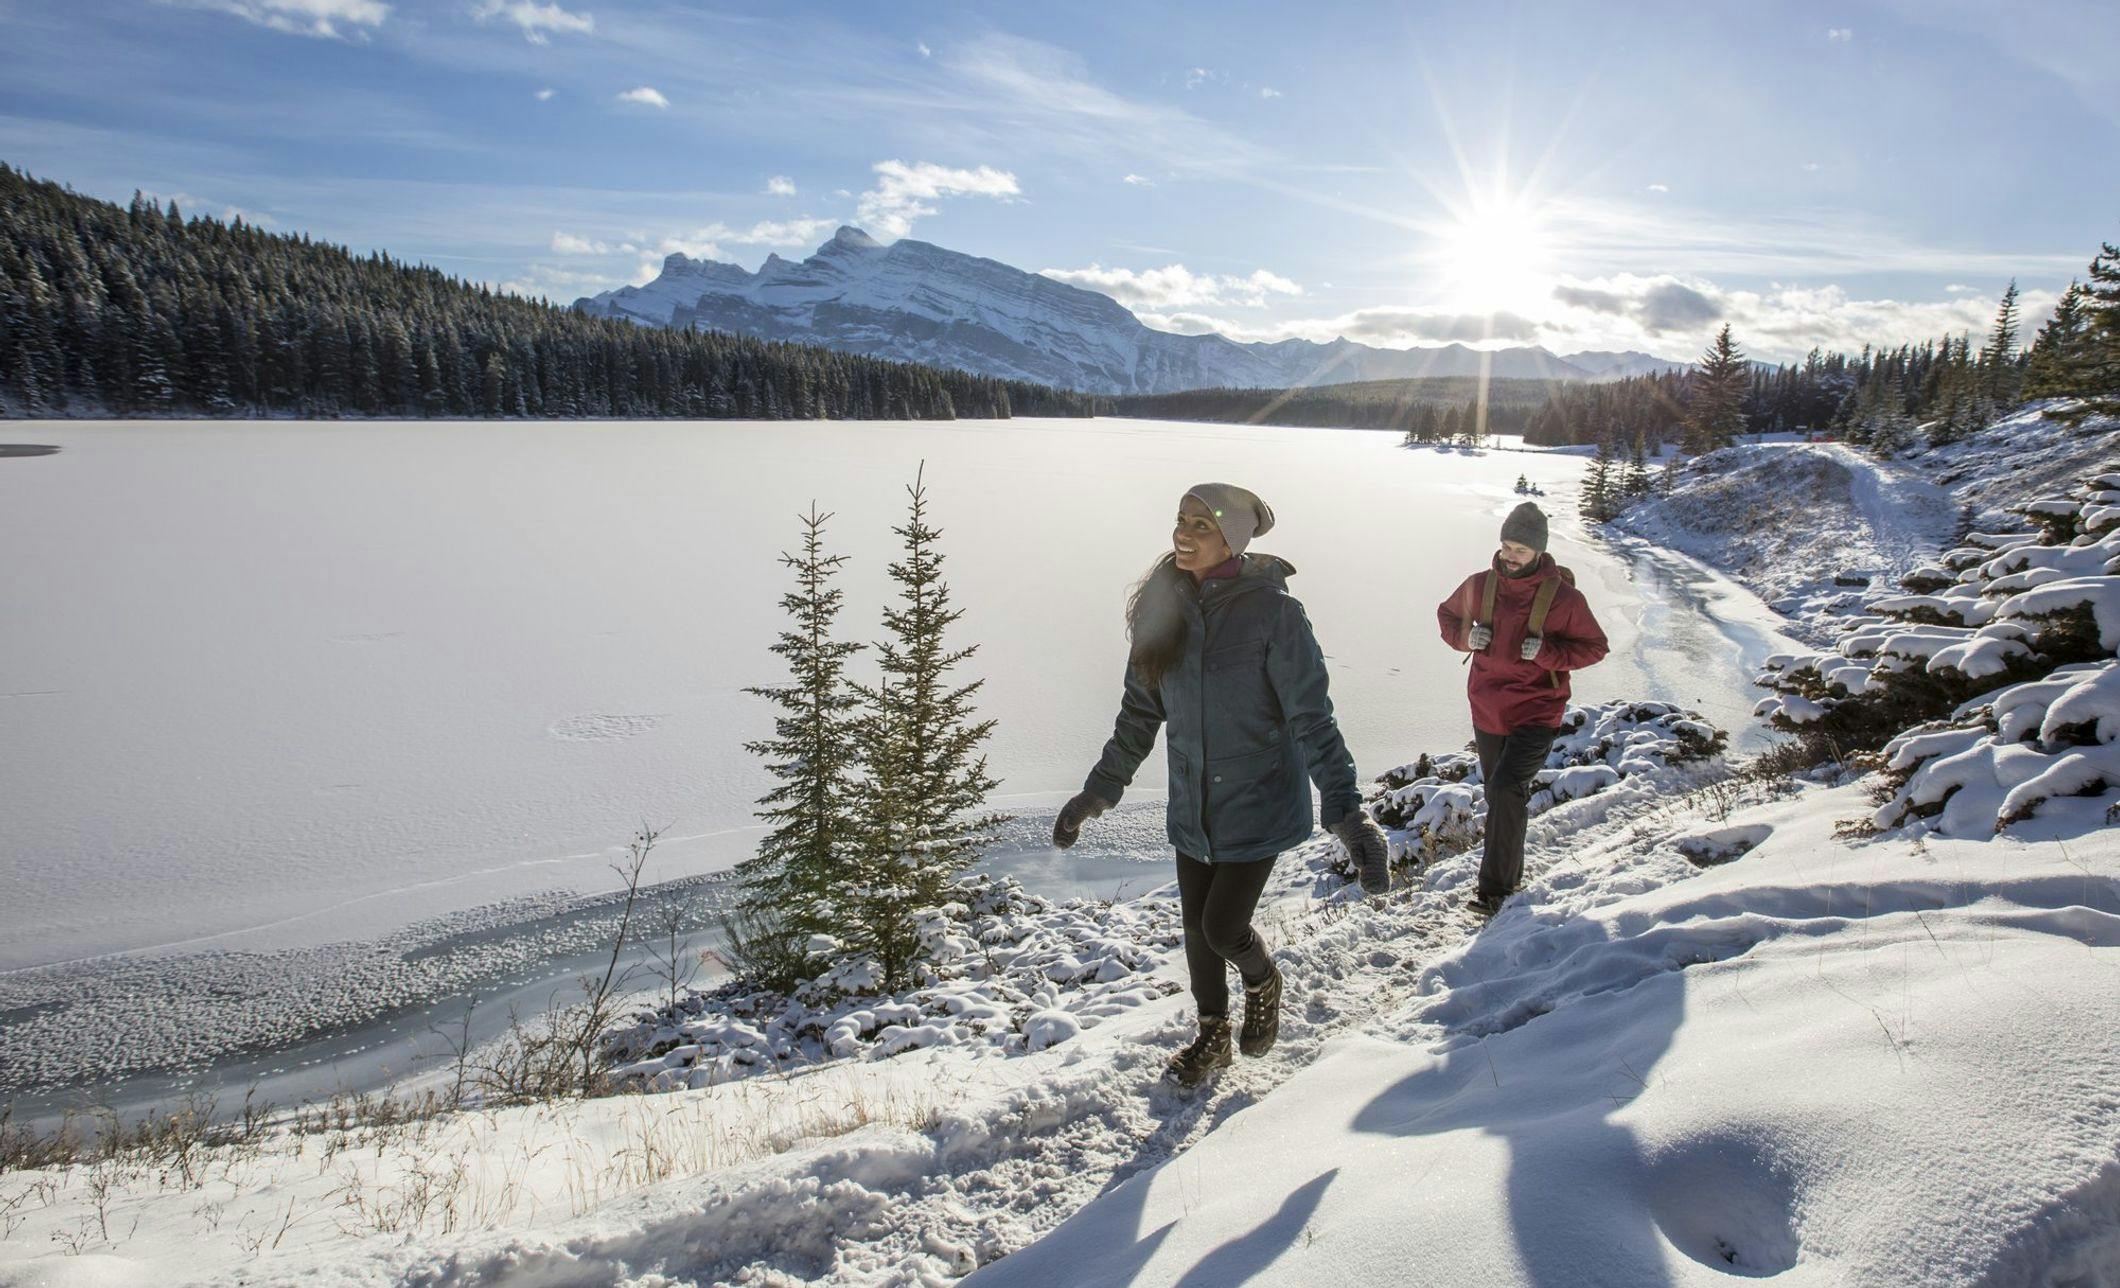 A couple enjoying a winter hike around a frozen lake